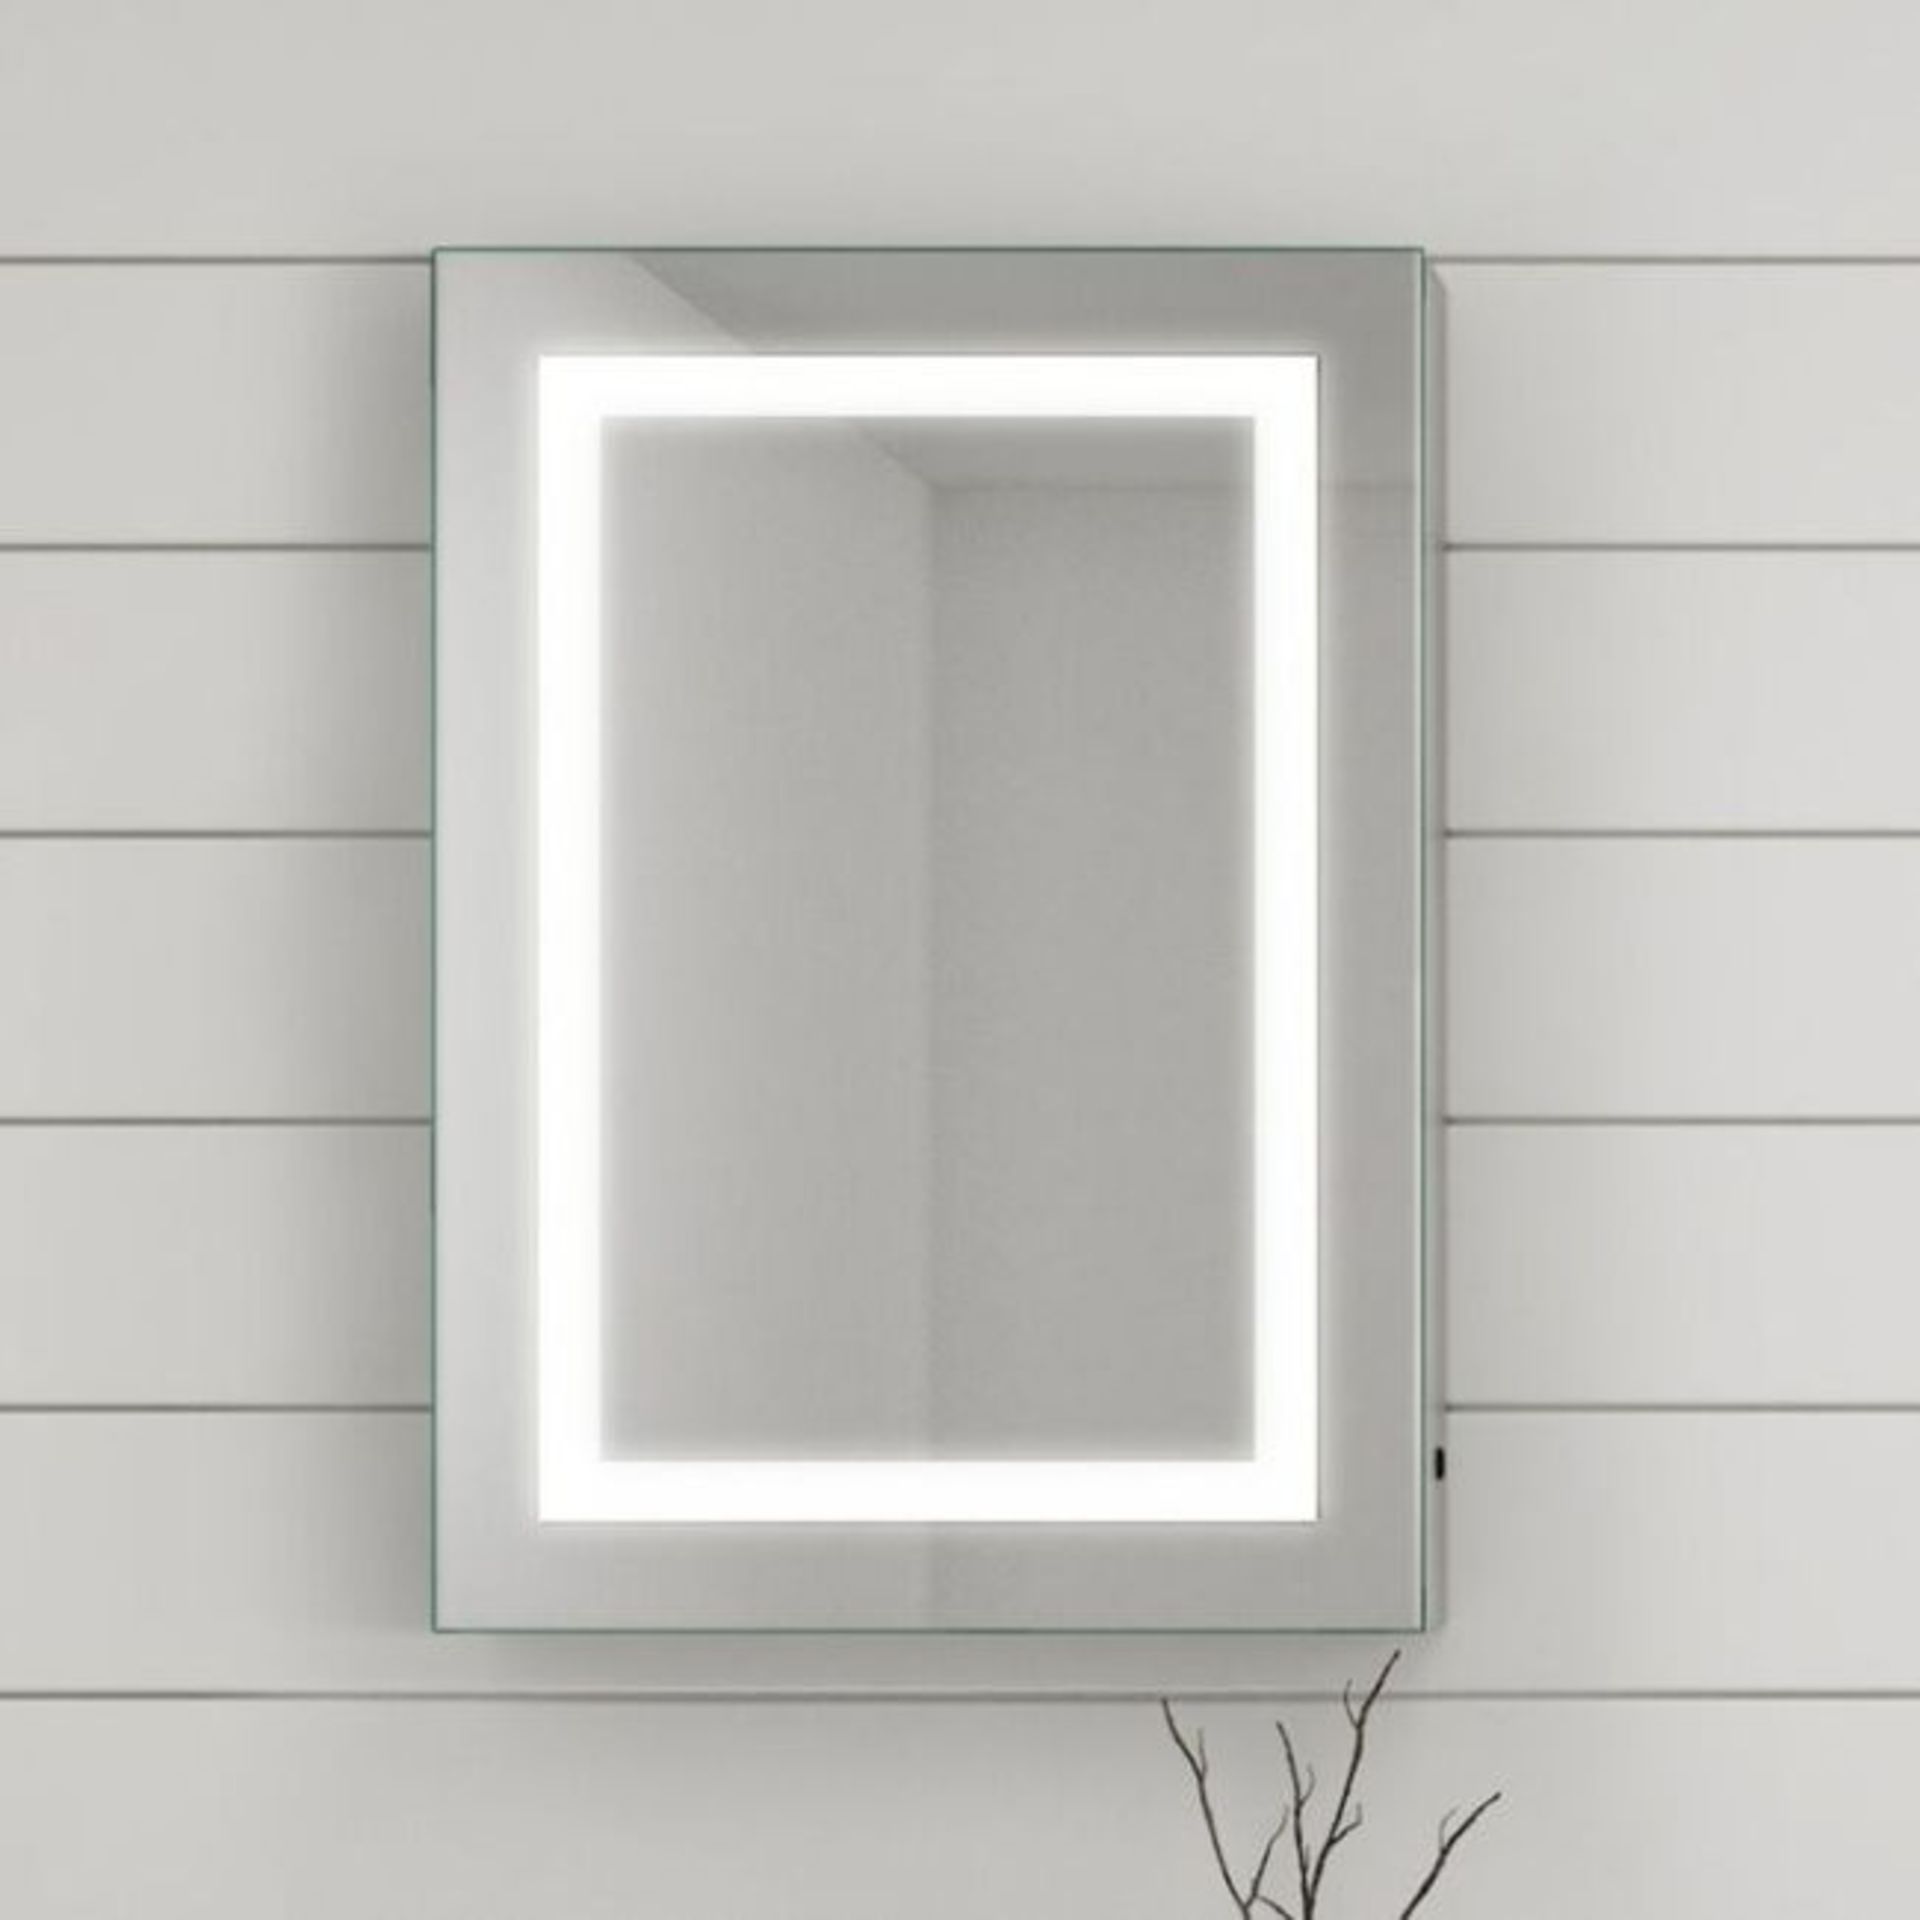 New 500x700mm Nova Illuminated Led Mirror Cabinet. RRP £599.99 Mc160.We Love This Mirror Ca...